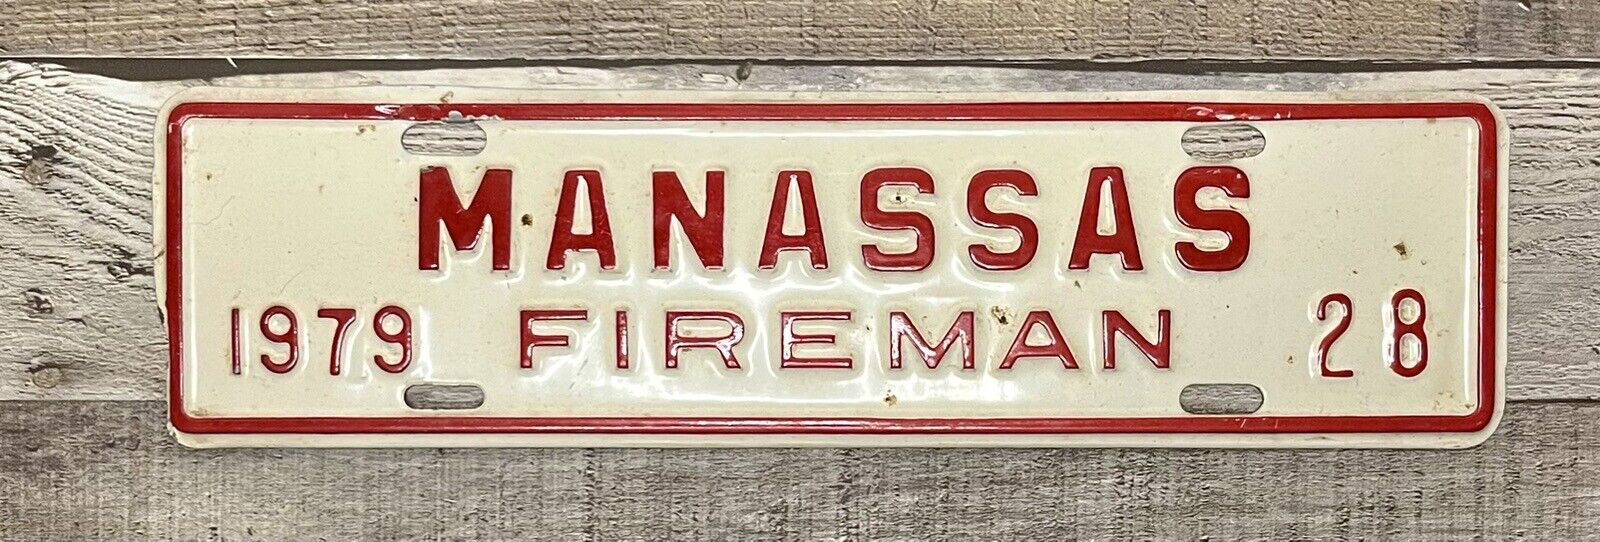 1979 Manassas Virginia Fireman License Plate Town Tag Topper Retro Firefighter